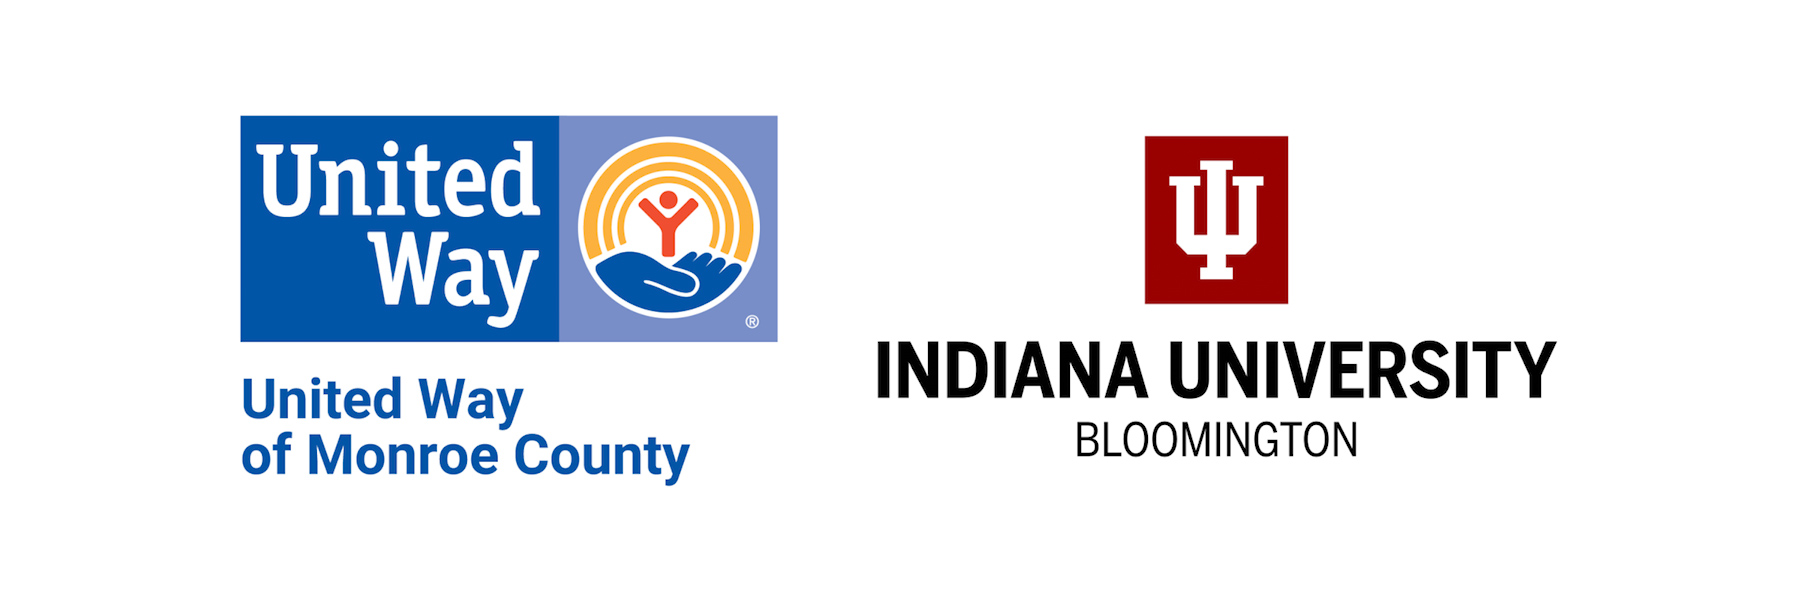 United Way of Monroe County and Indiana University Bloomington logos